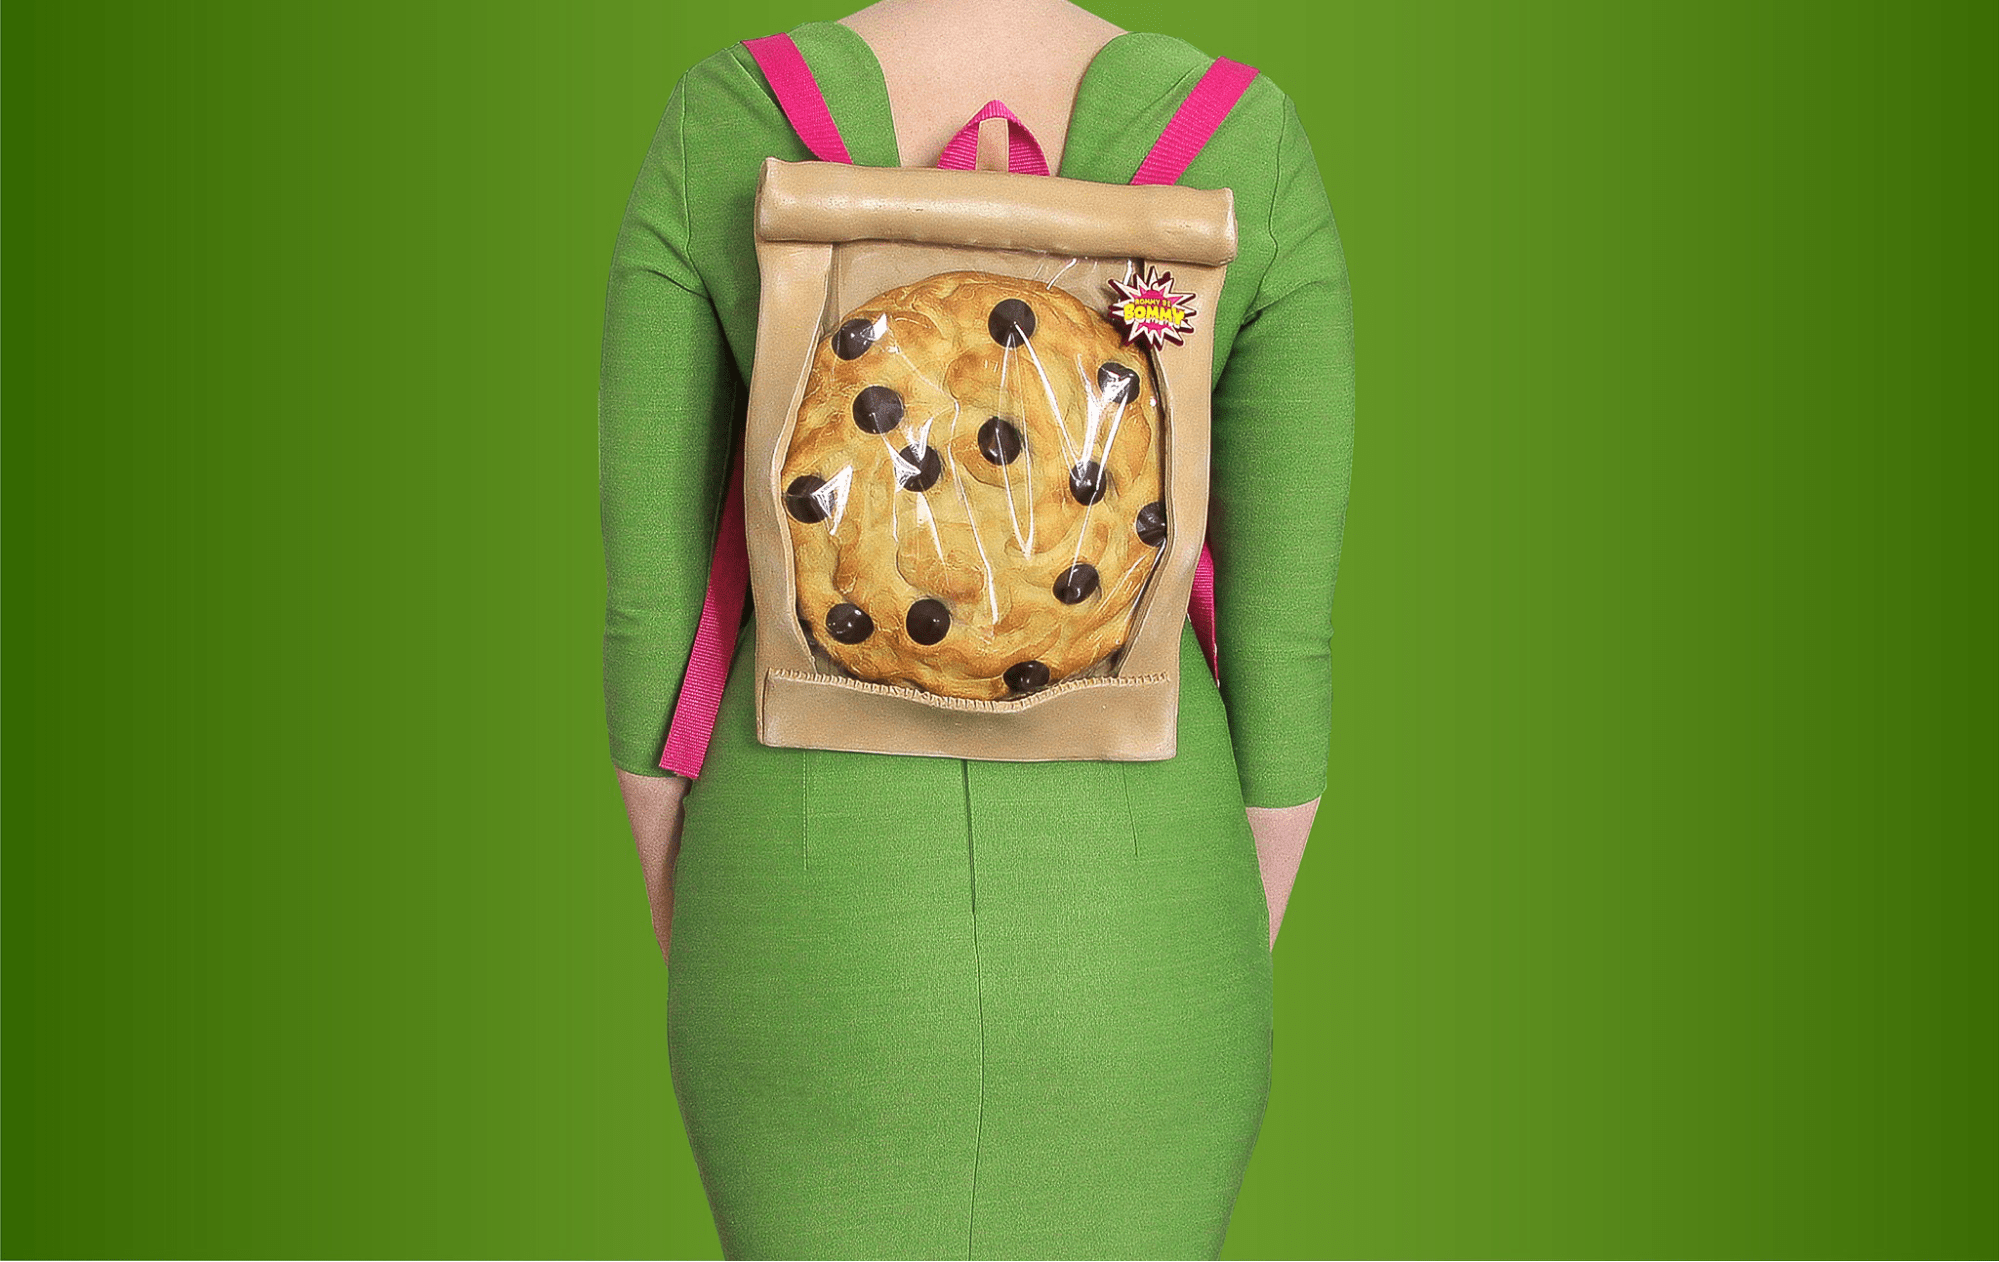 empanada purse - cookie backpack